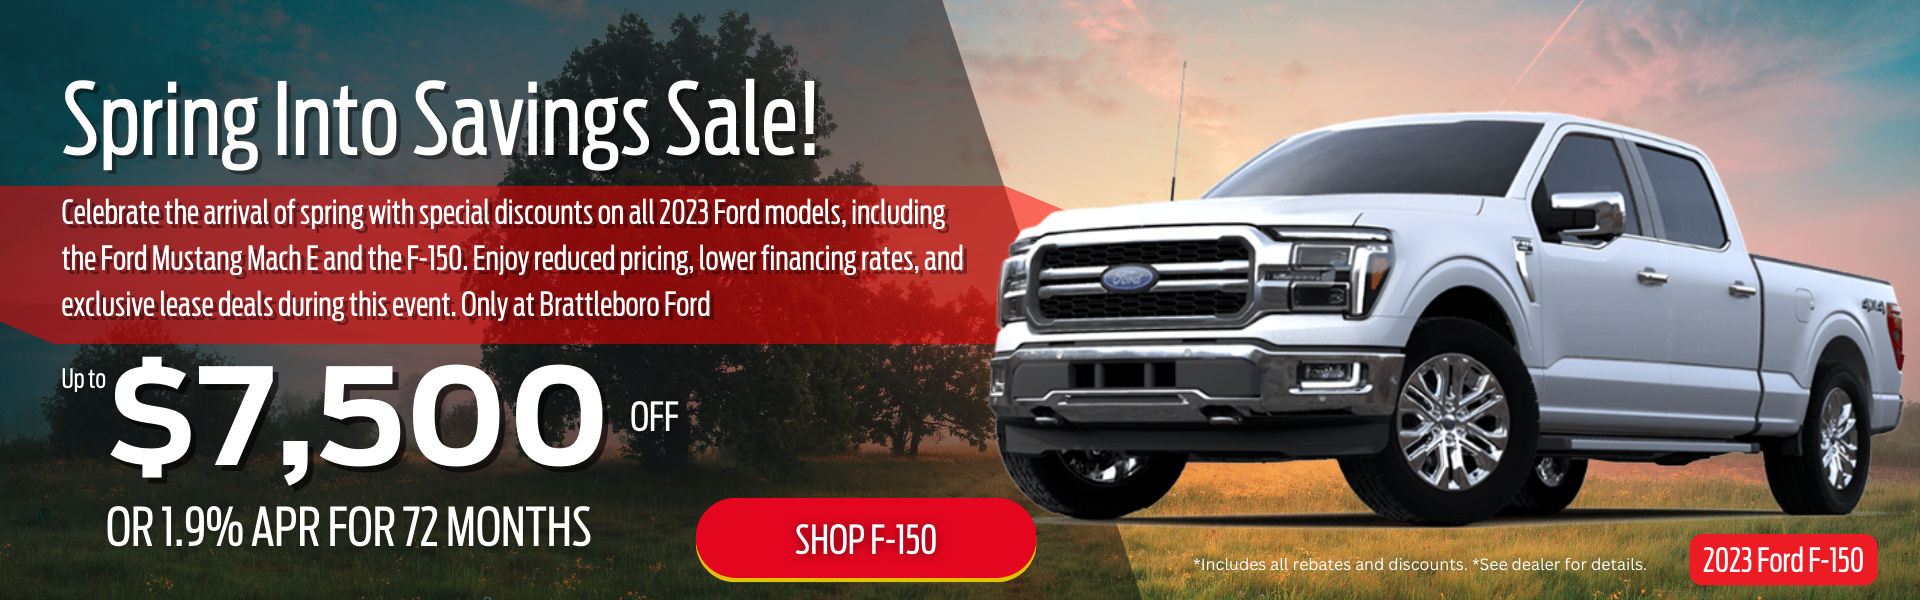 Spring into Savings Sale - F 150 - Brattleboro Ford banner